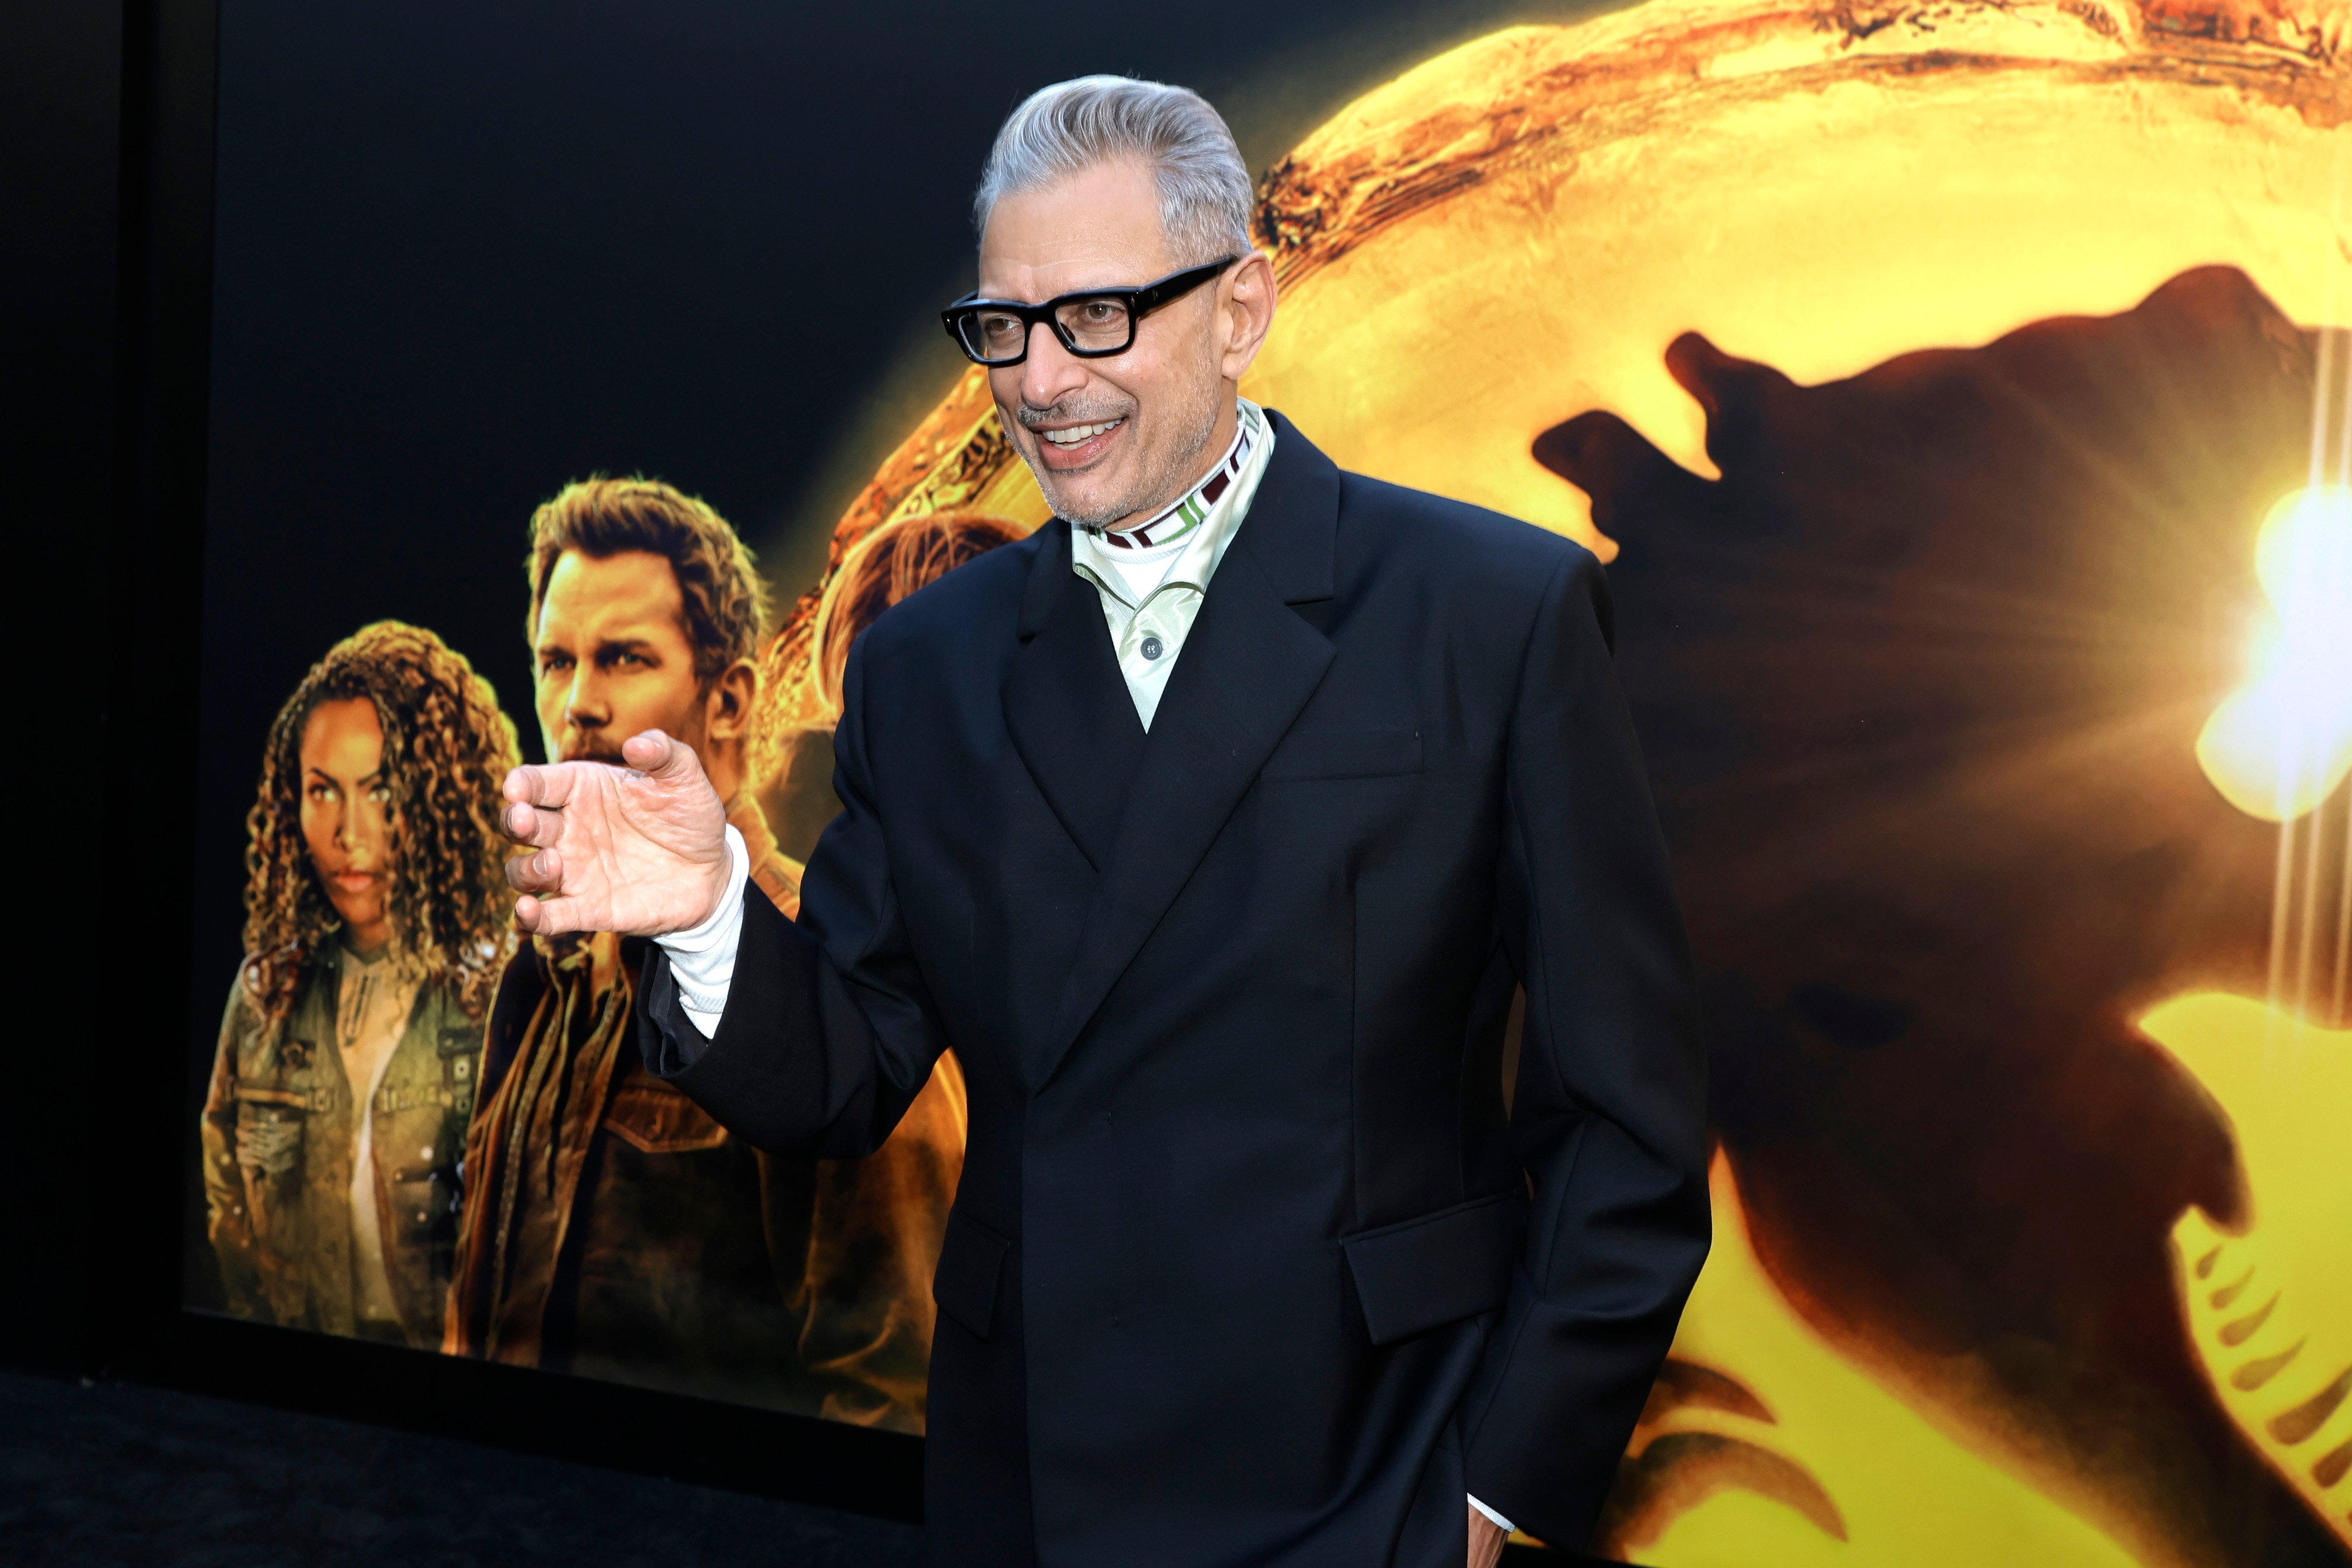 Jeff Goldblum attends the Los Angeles premiere of Jurassic World Dominion